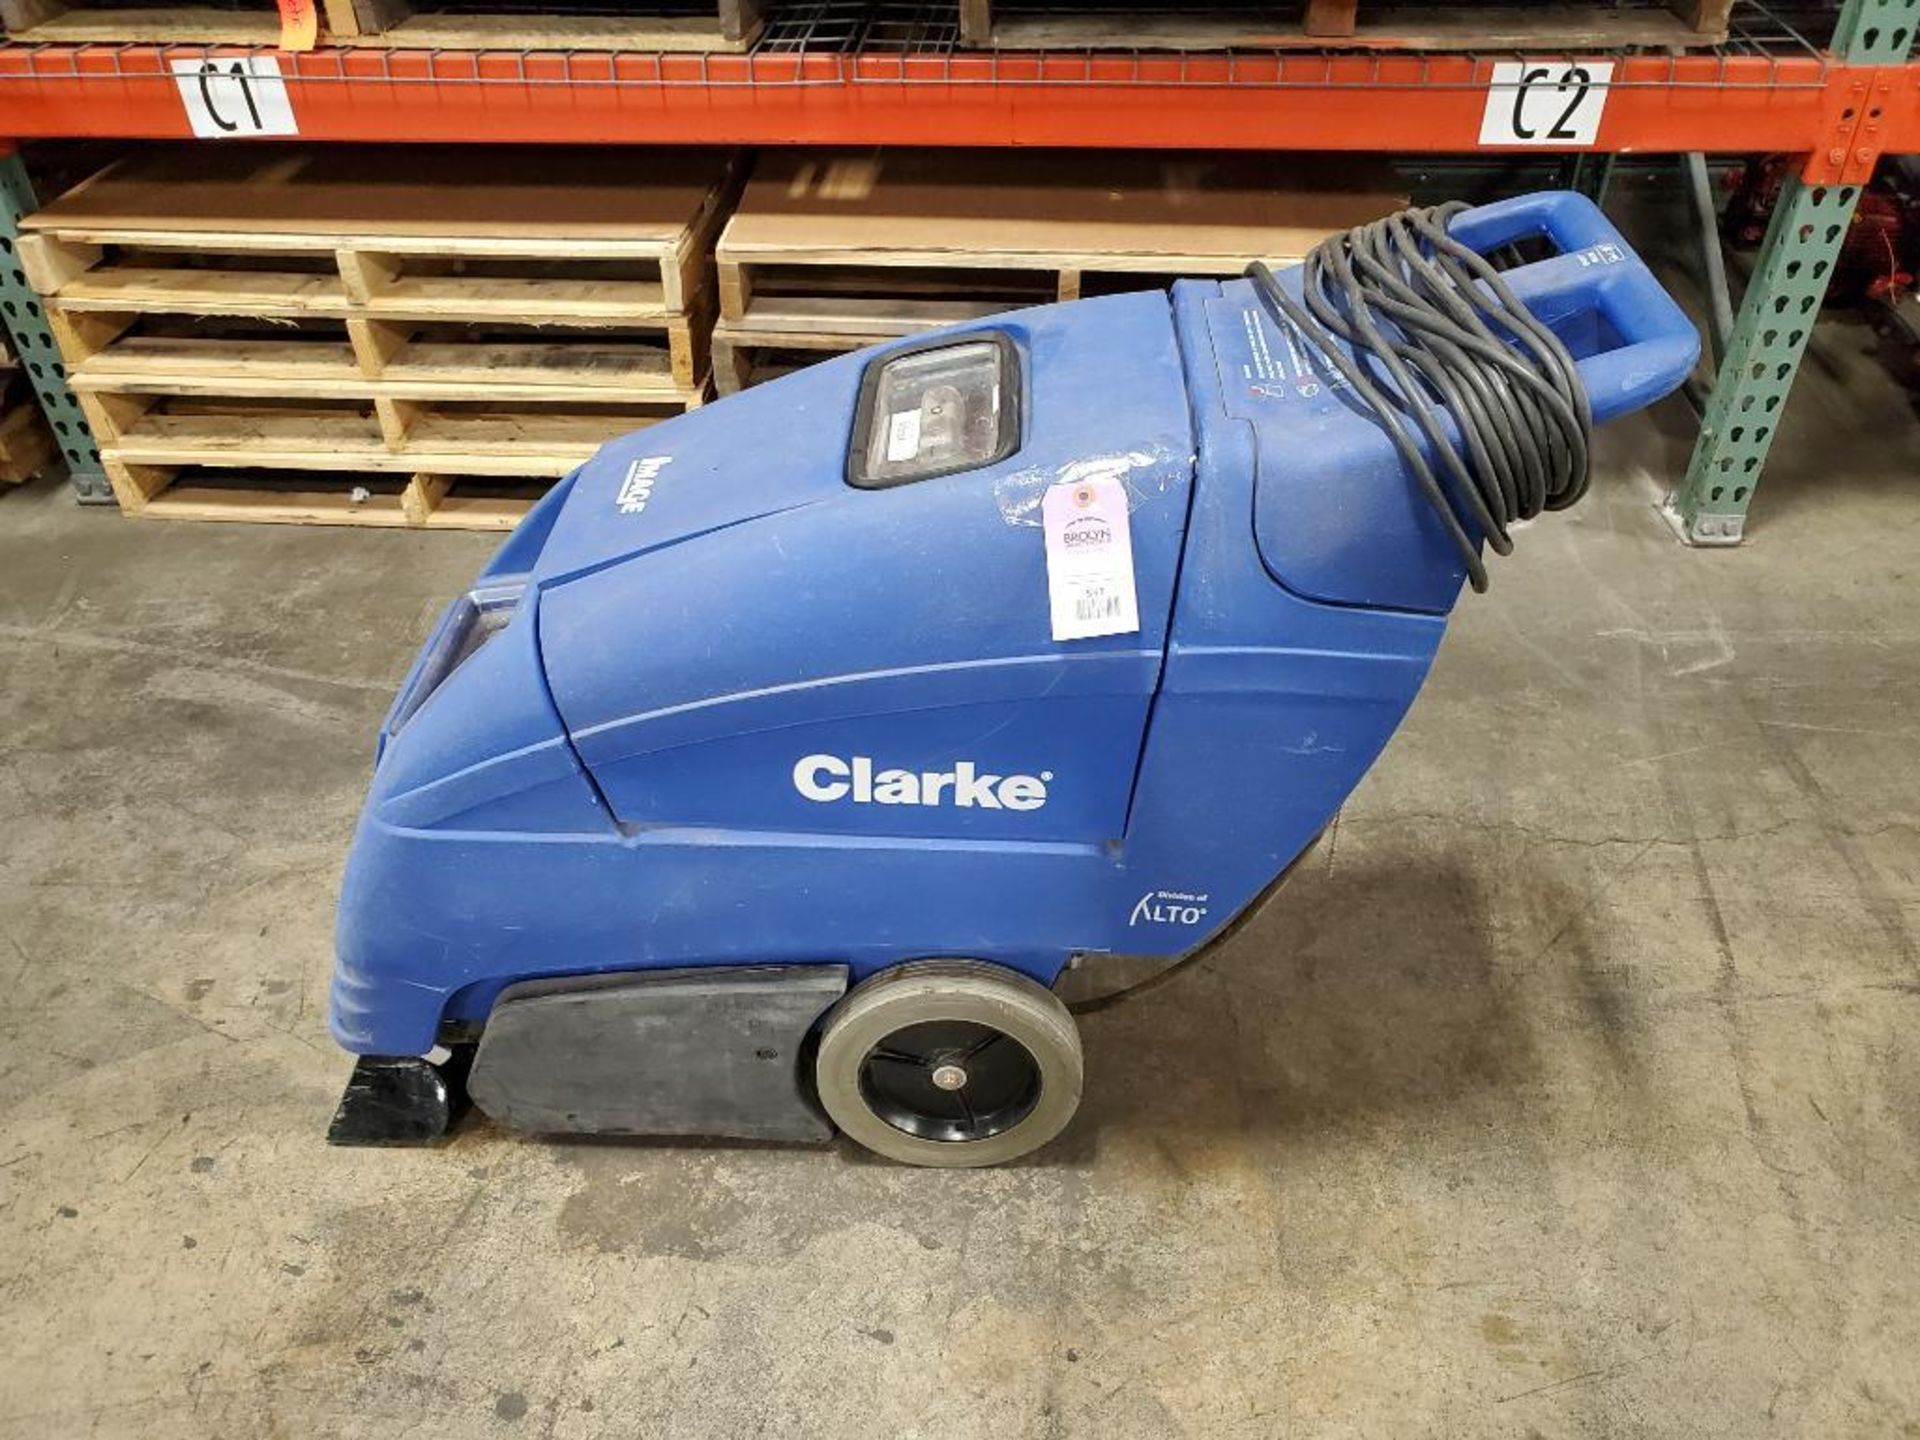 16" Clarke electric walk behind carpet extractor.